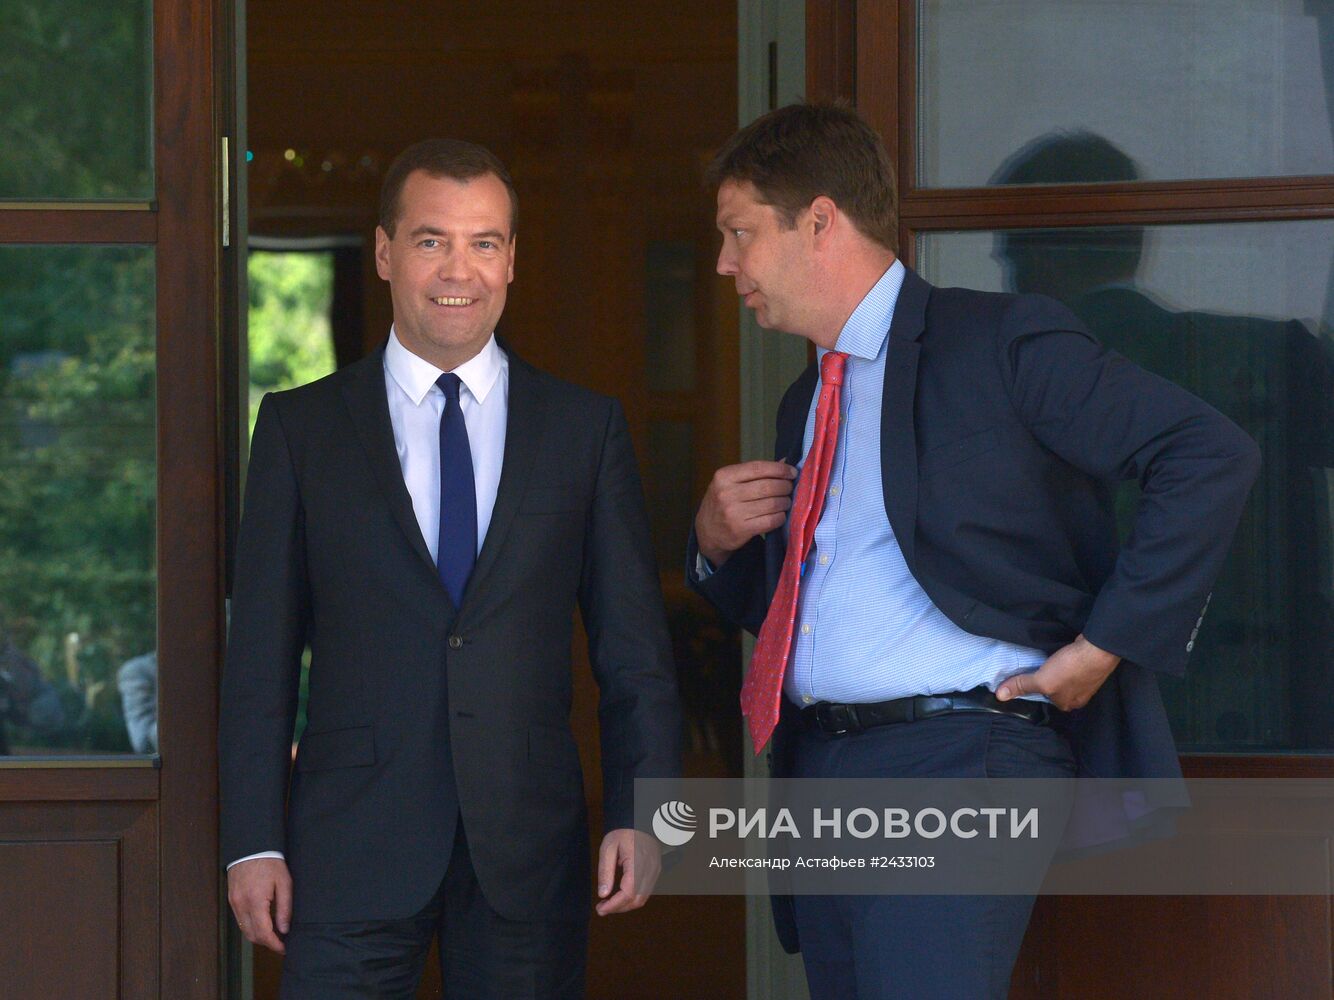 Д.Медведев дал интервью американскому телеканалу "Bloomberg TV"